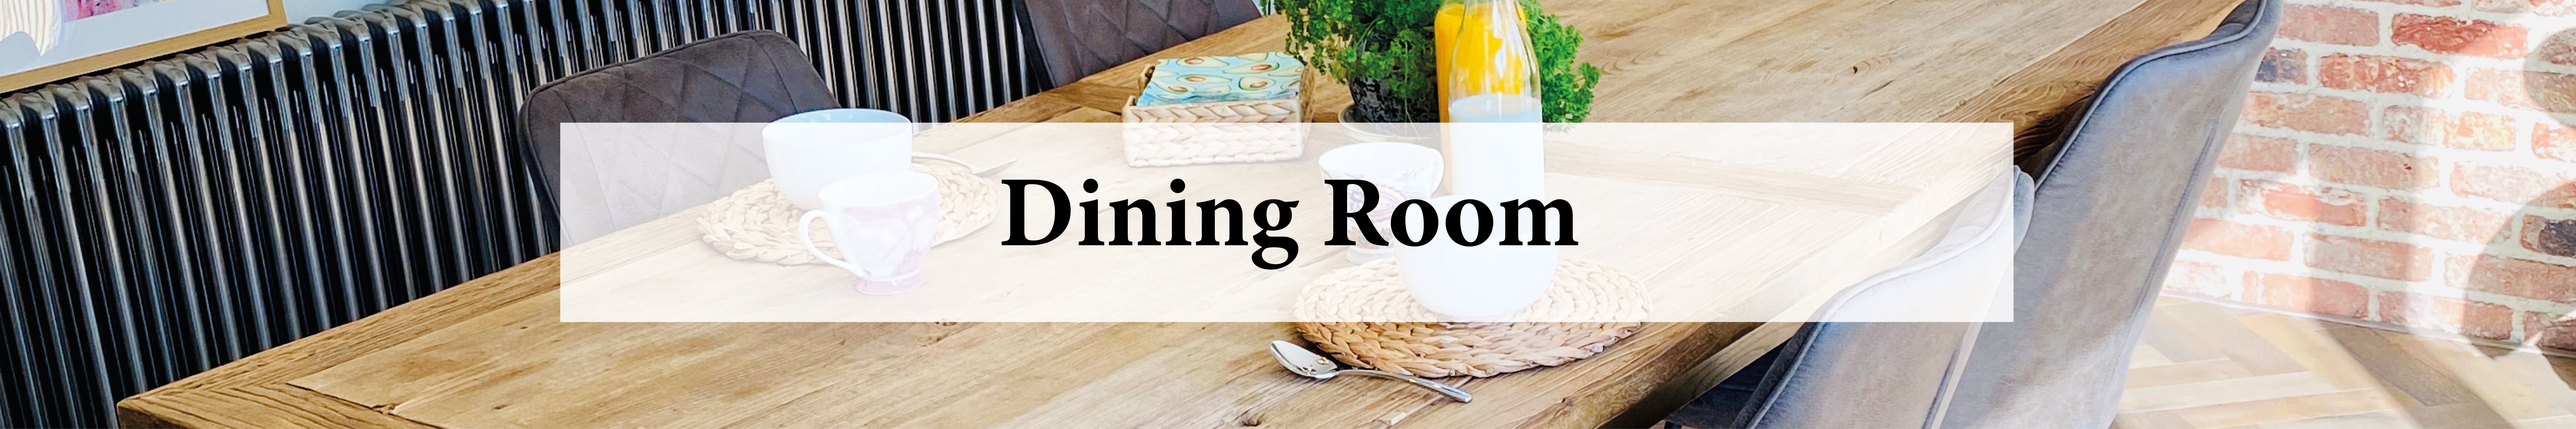 Dining Room Furniture | Oak Dining Room Furniture Sets | HomePlus Furniture